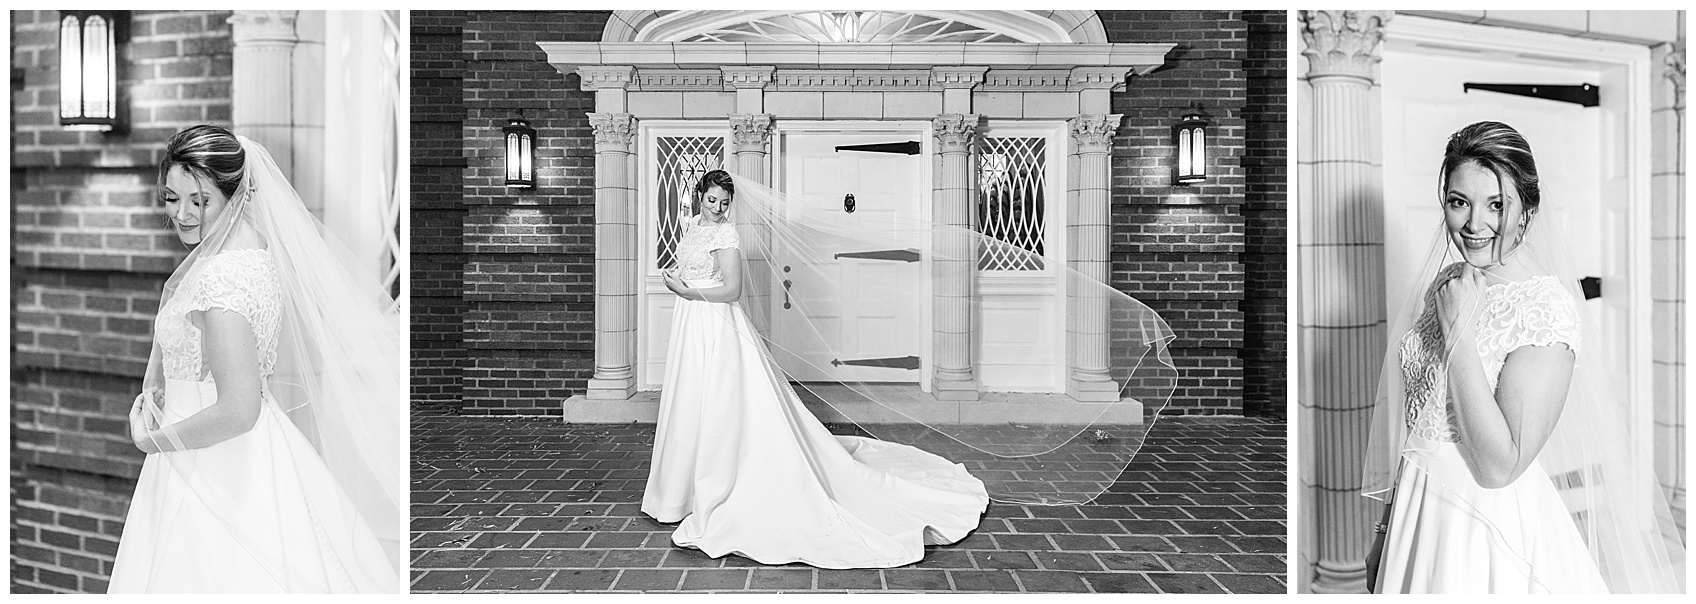 Black and White Wedding Photos of Bride